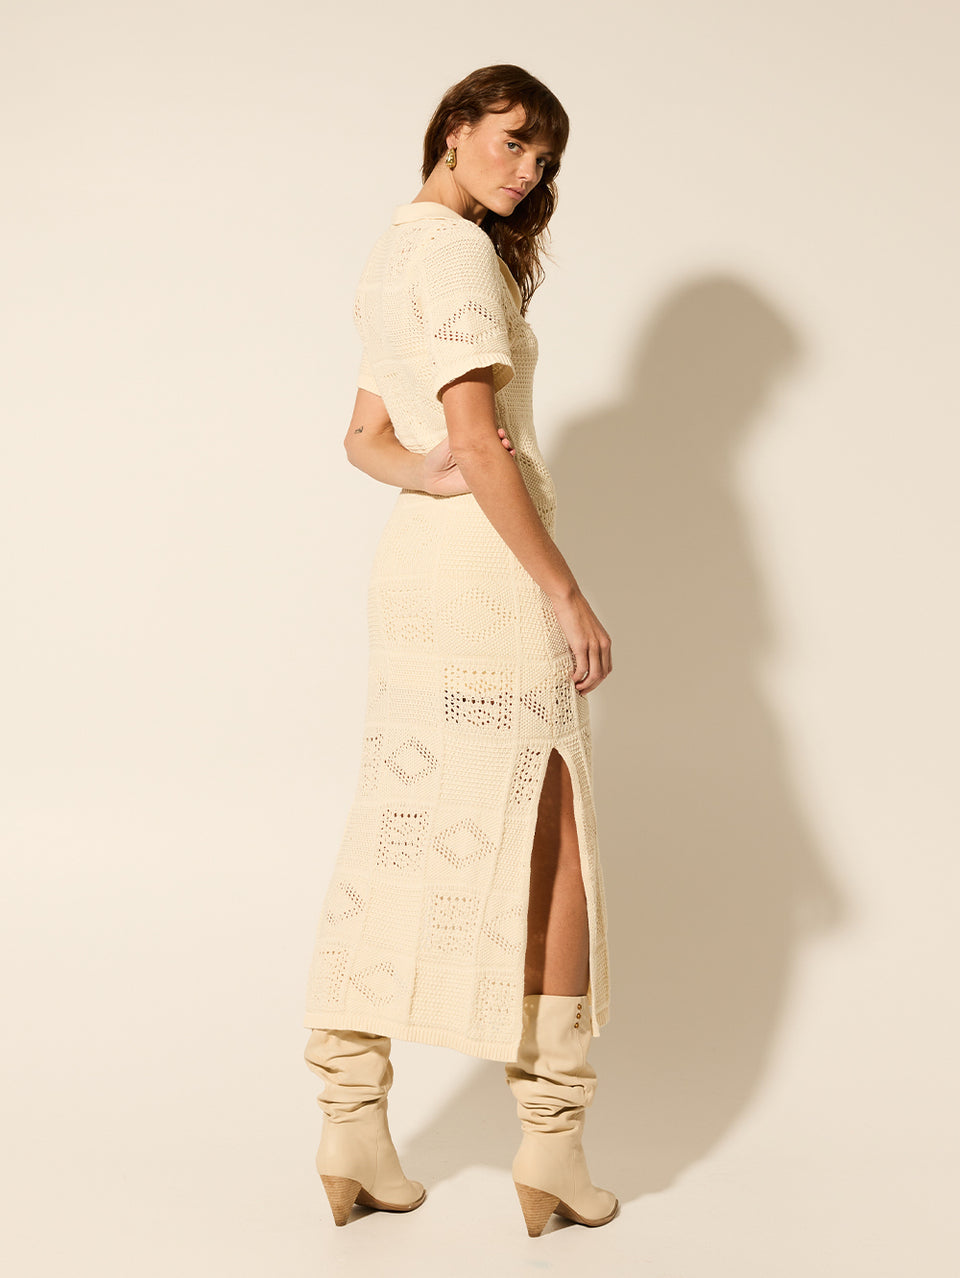 Clementine Collared Midi Dress Cream KIVARI | Model wears cream knit midi dress back view